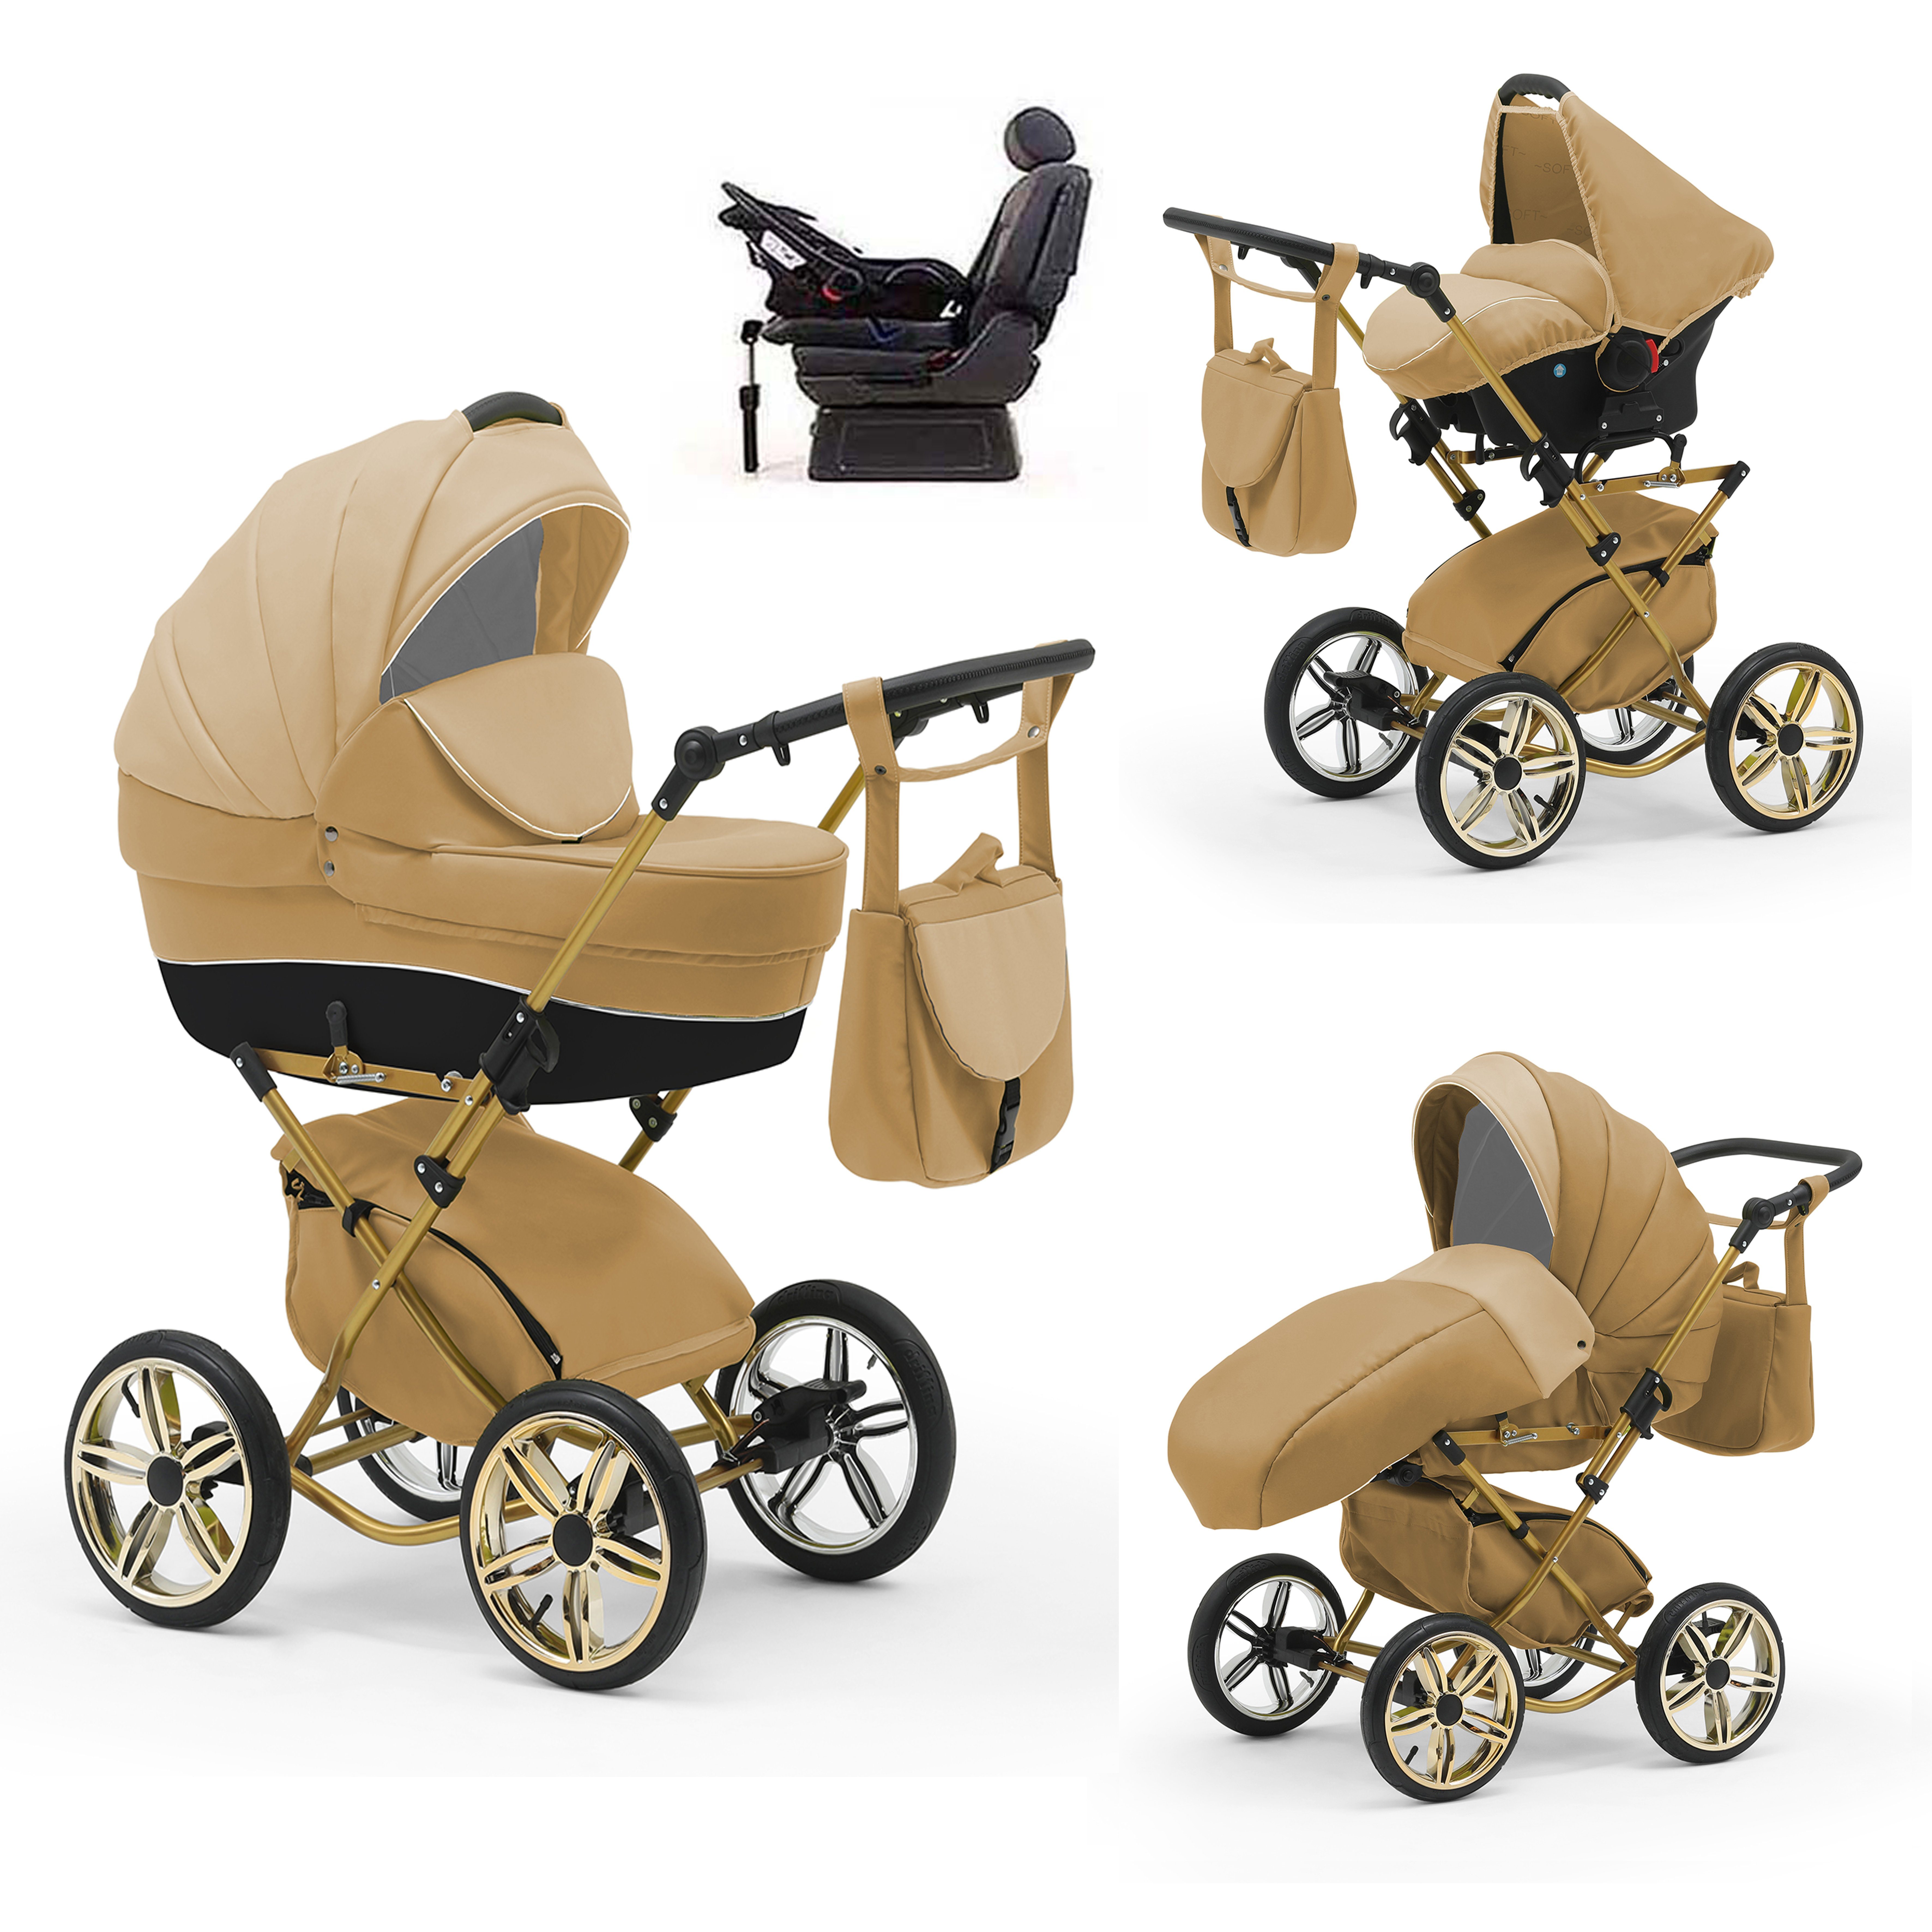 babies-on-wheels Kombi-Kinderwagen Sorento 4 in 1 inkl. Autositz und Iso Base - 14 Teile - in 10 Designs Hellbeige-Beige